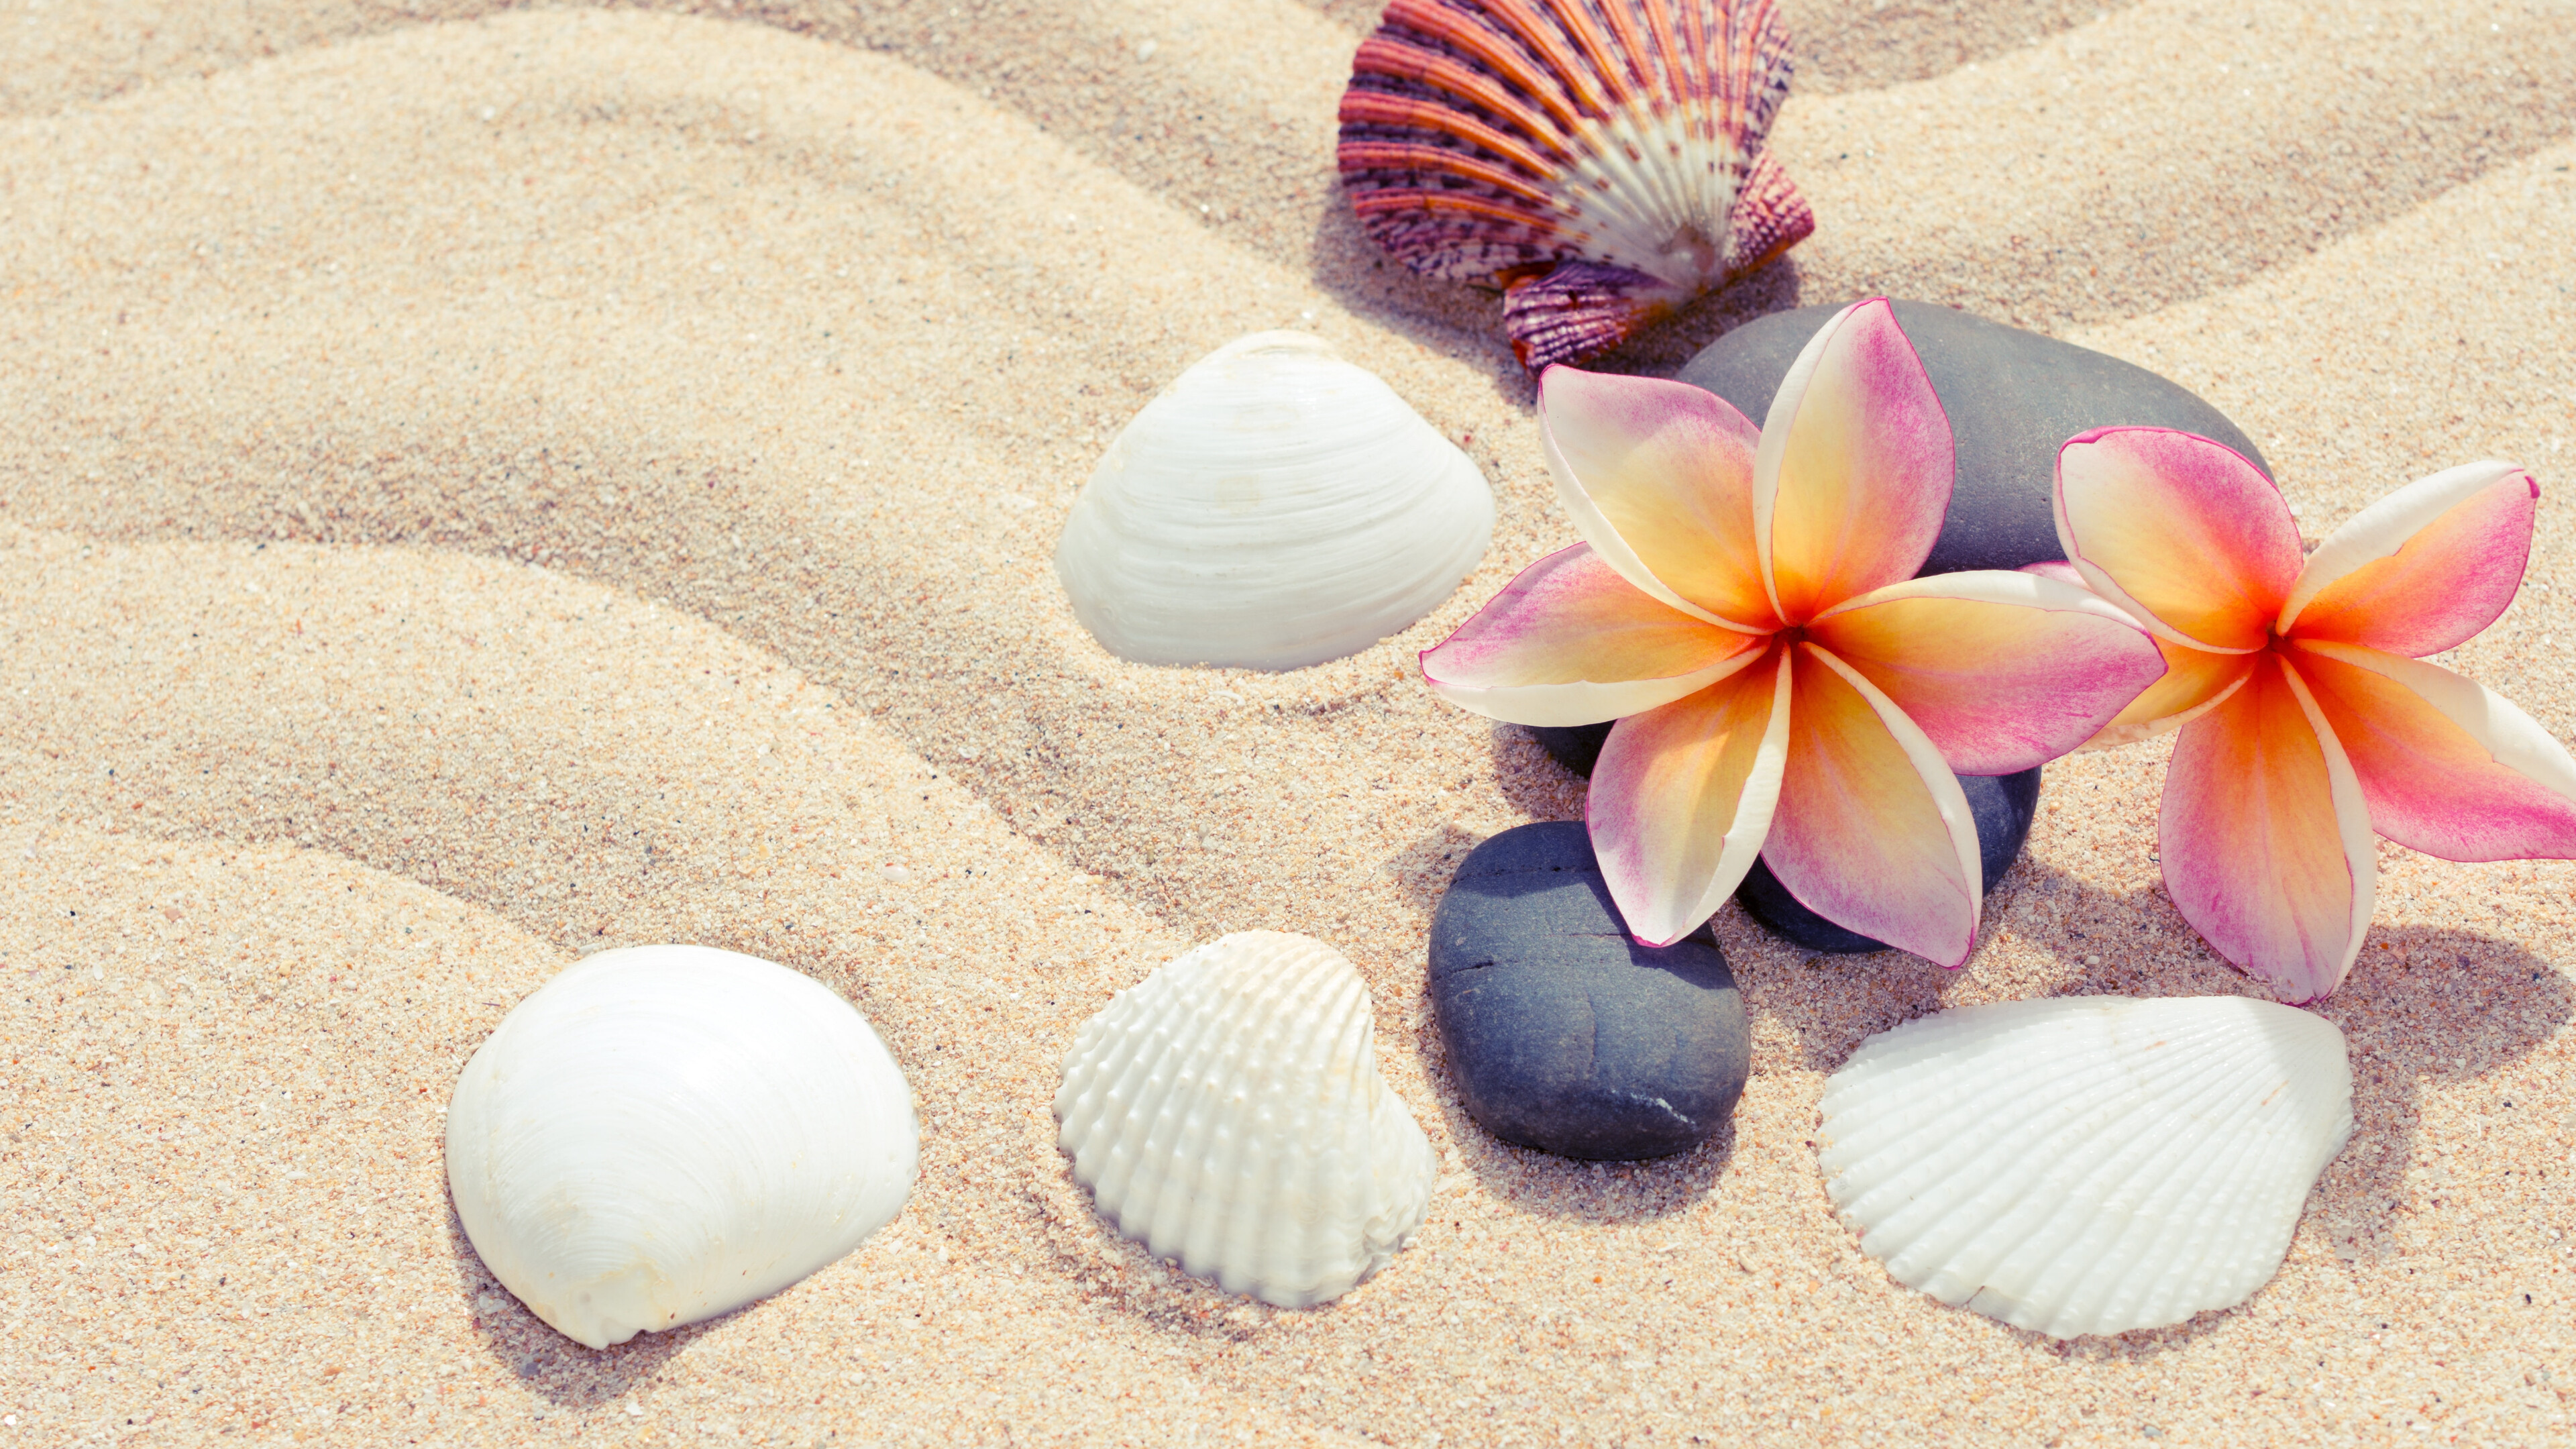 Sands and plumeria, Seashell delight, Ultra HD wallpaper, Coastal bliss, 3840x2160 4K Desktop